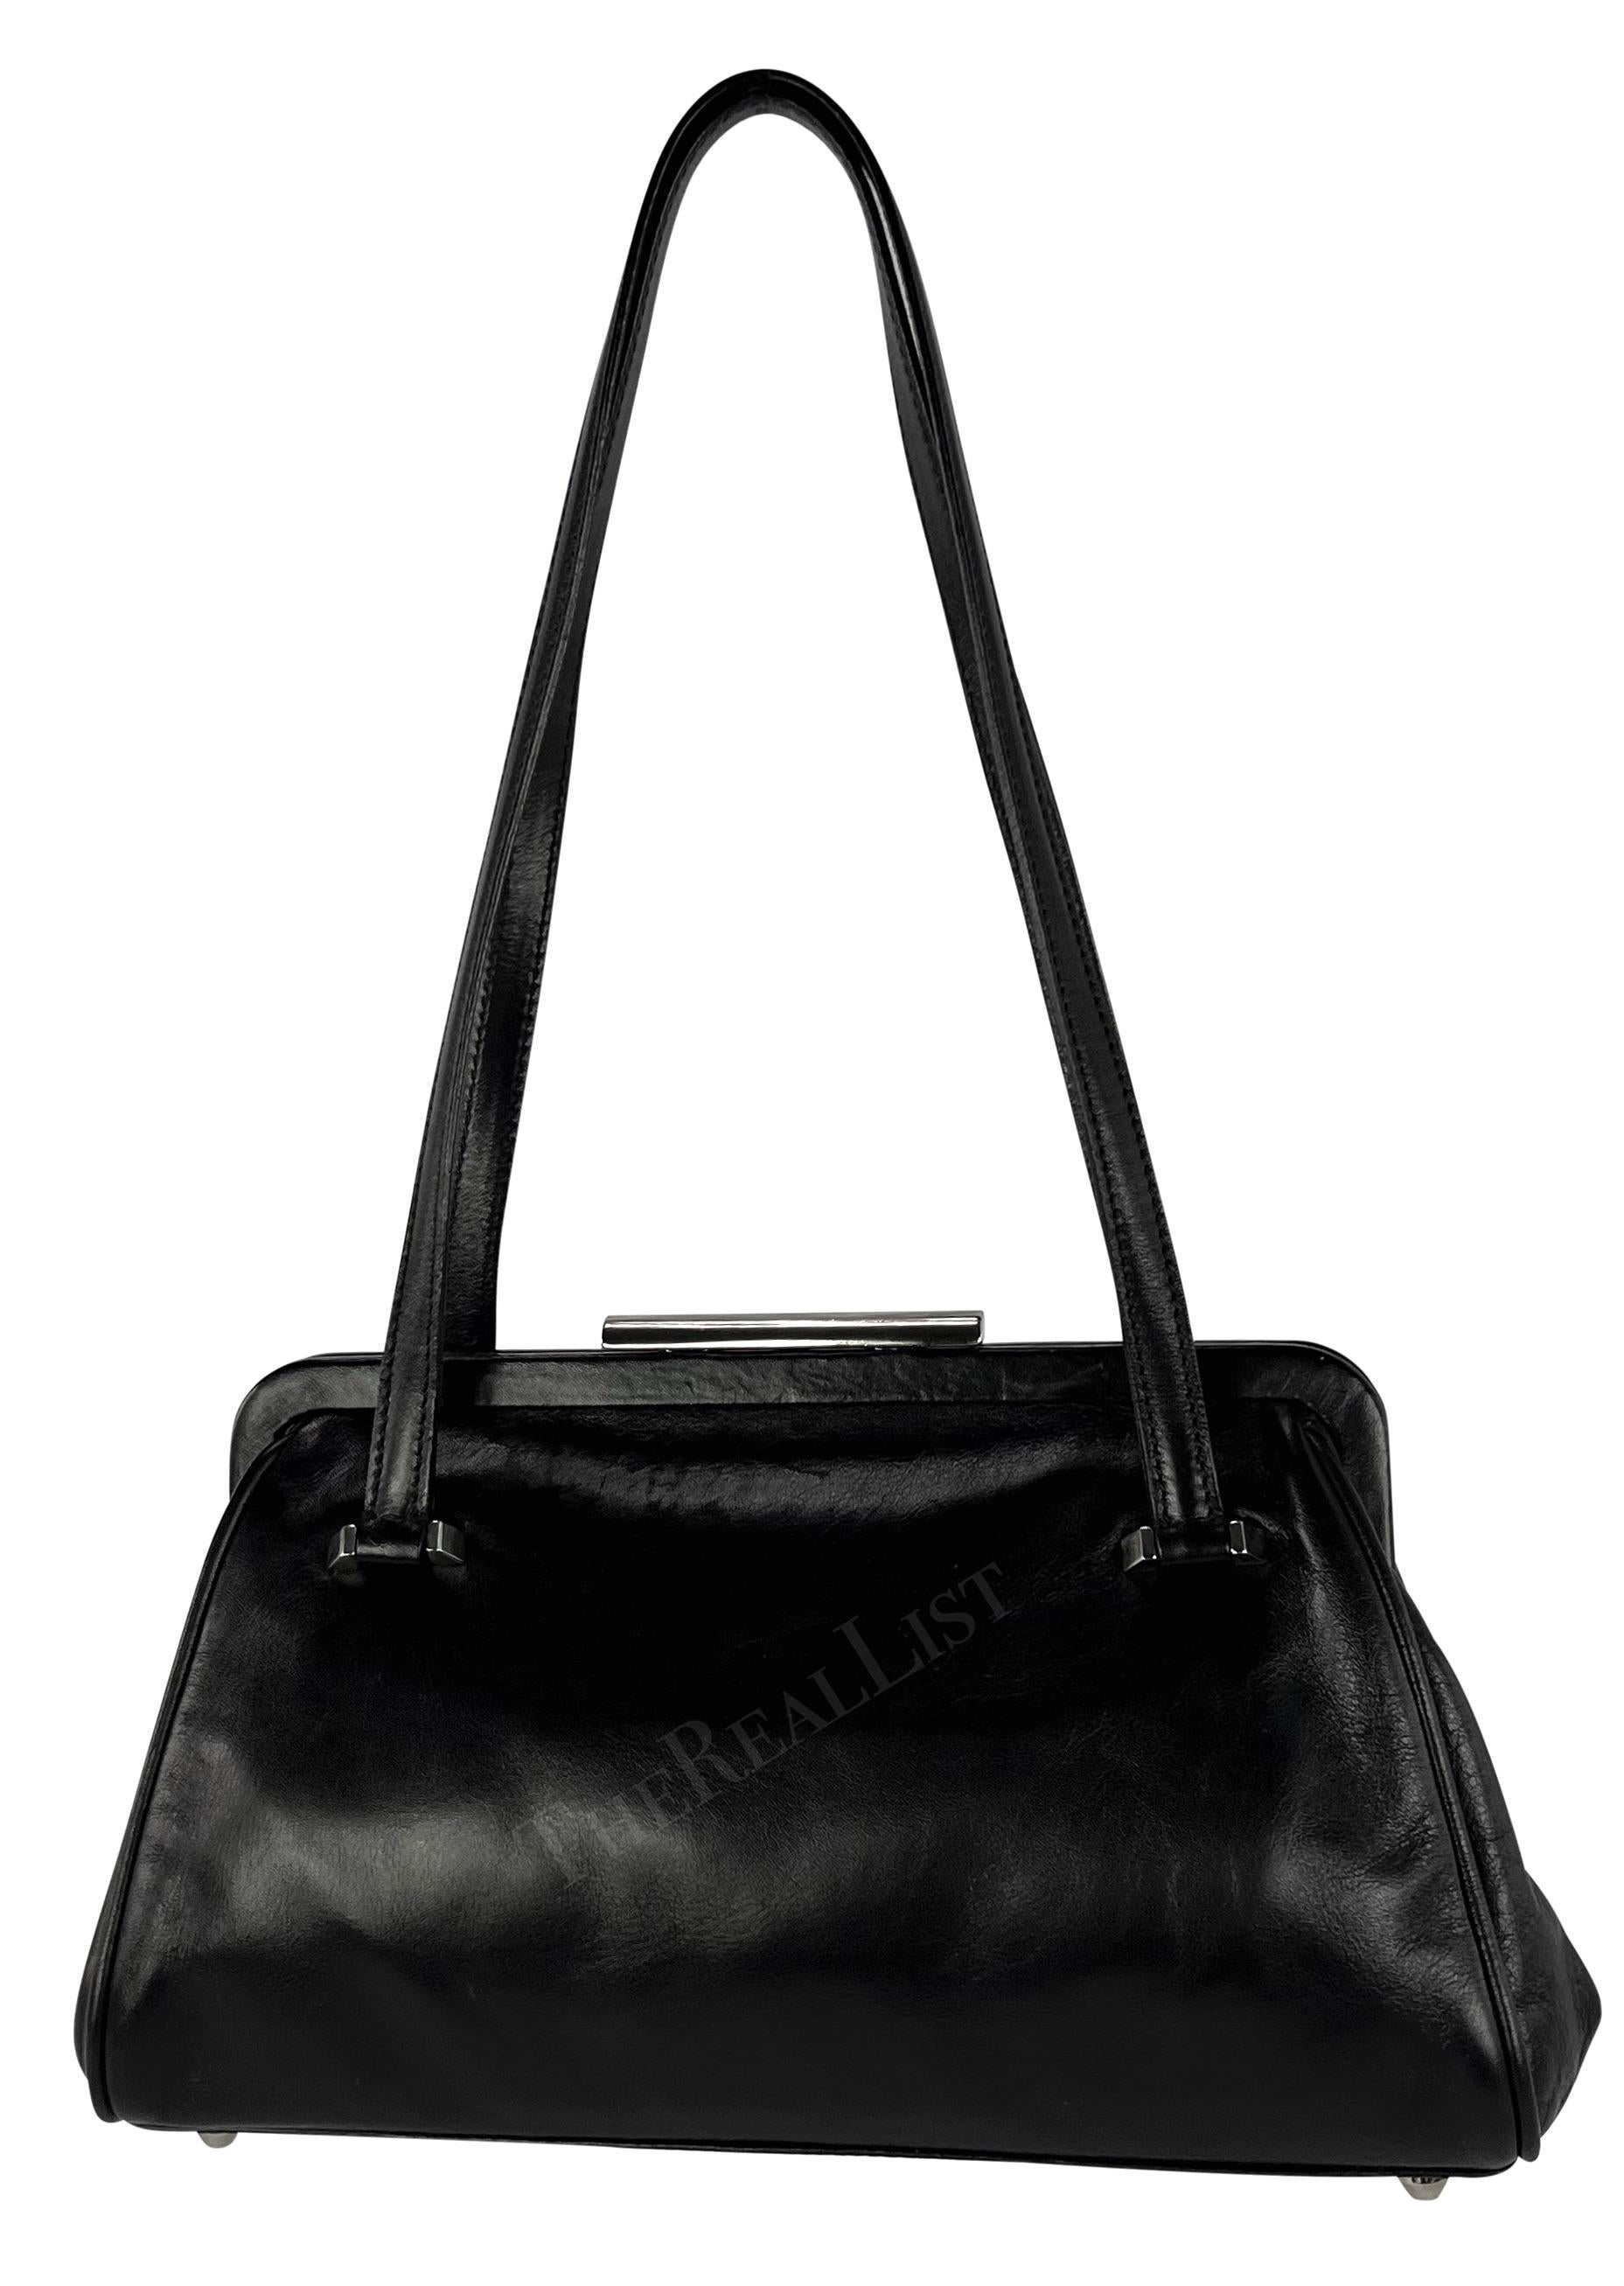 S/S 2003 Dolce & Gabbana 'Sex & Love' Black Leather Mini Shoulder Bag For Sale 1